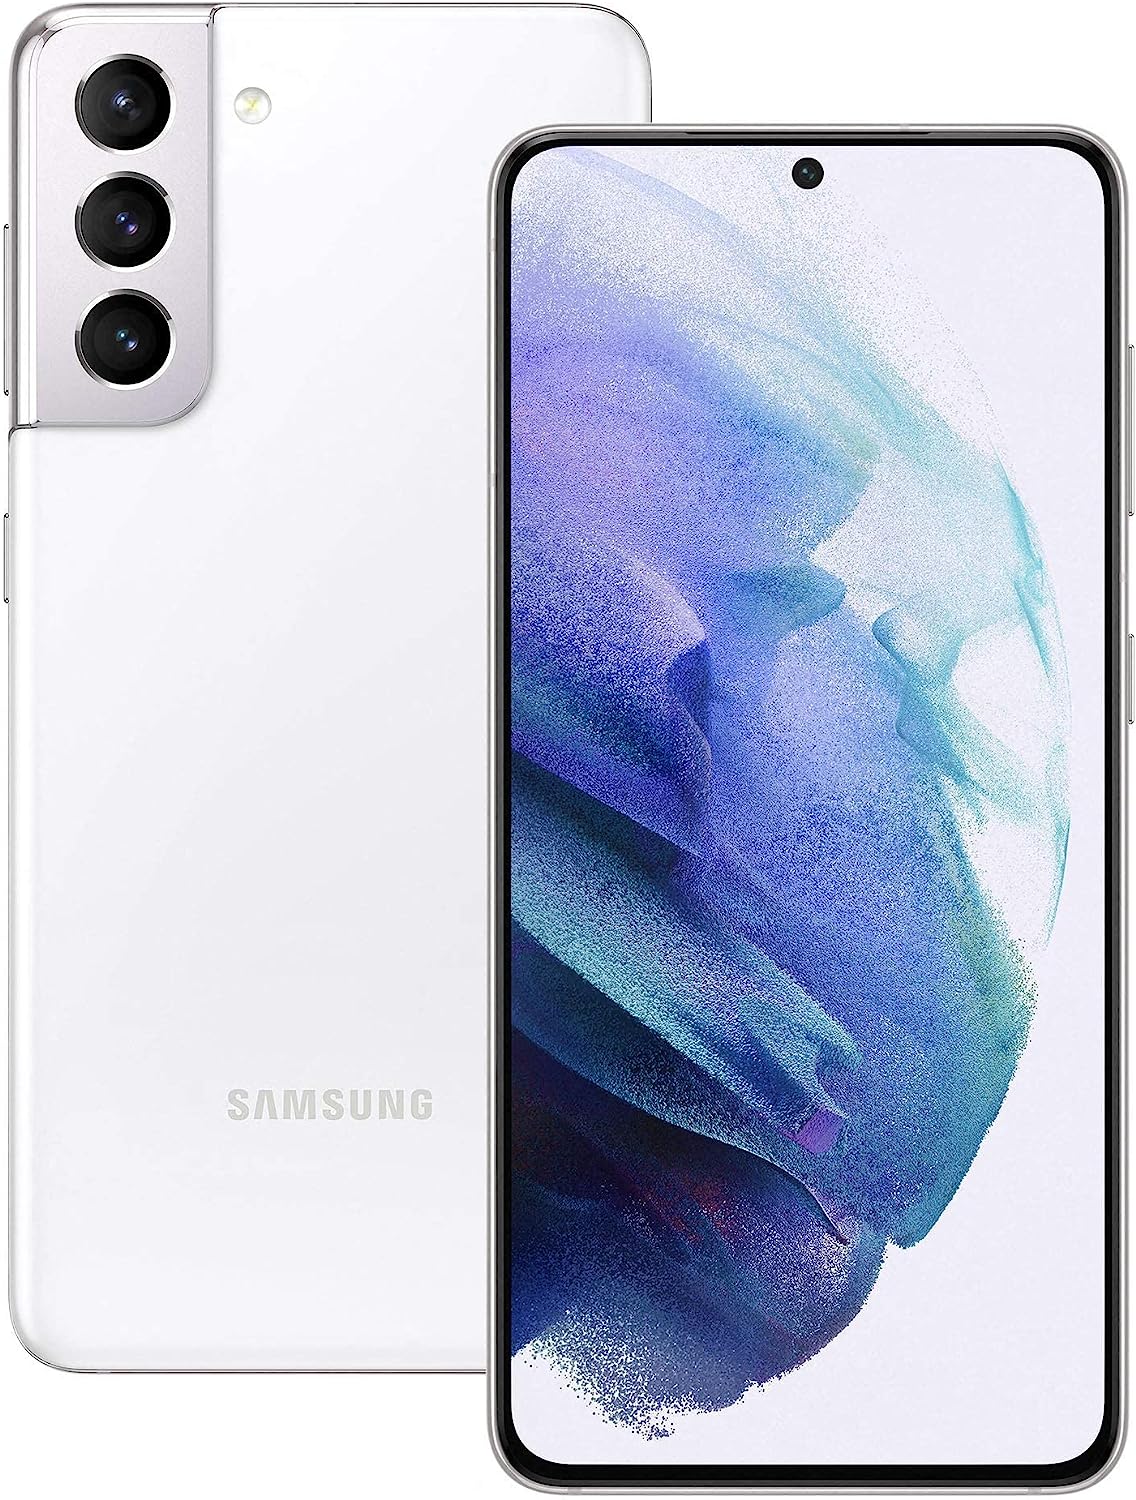 Samsung Galaxy S21 5G 128GB White Good 128GB White Good